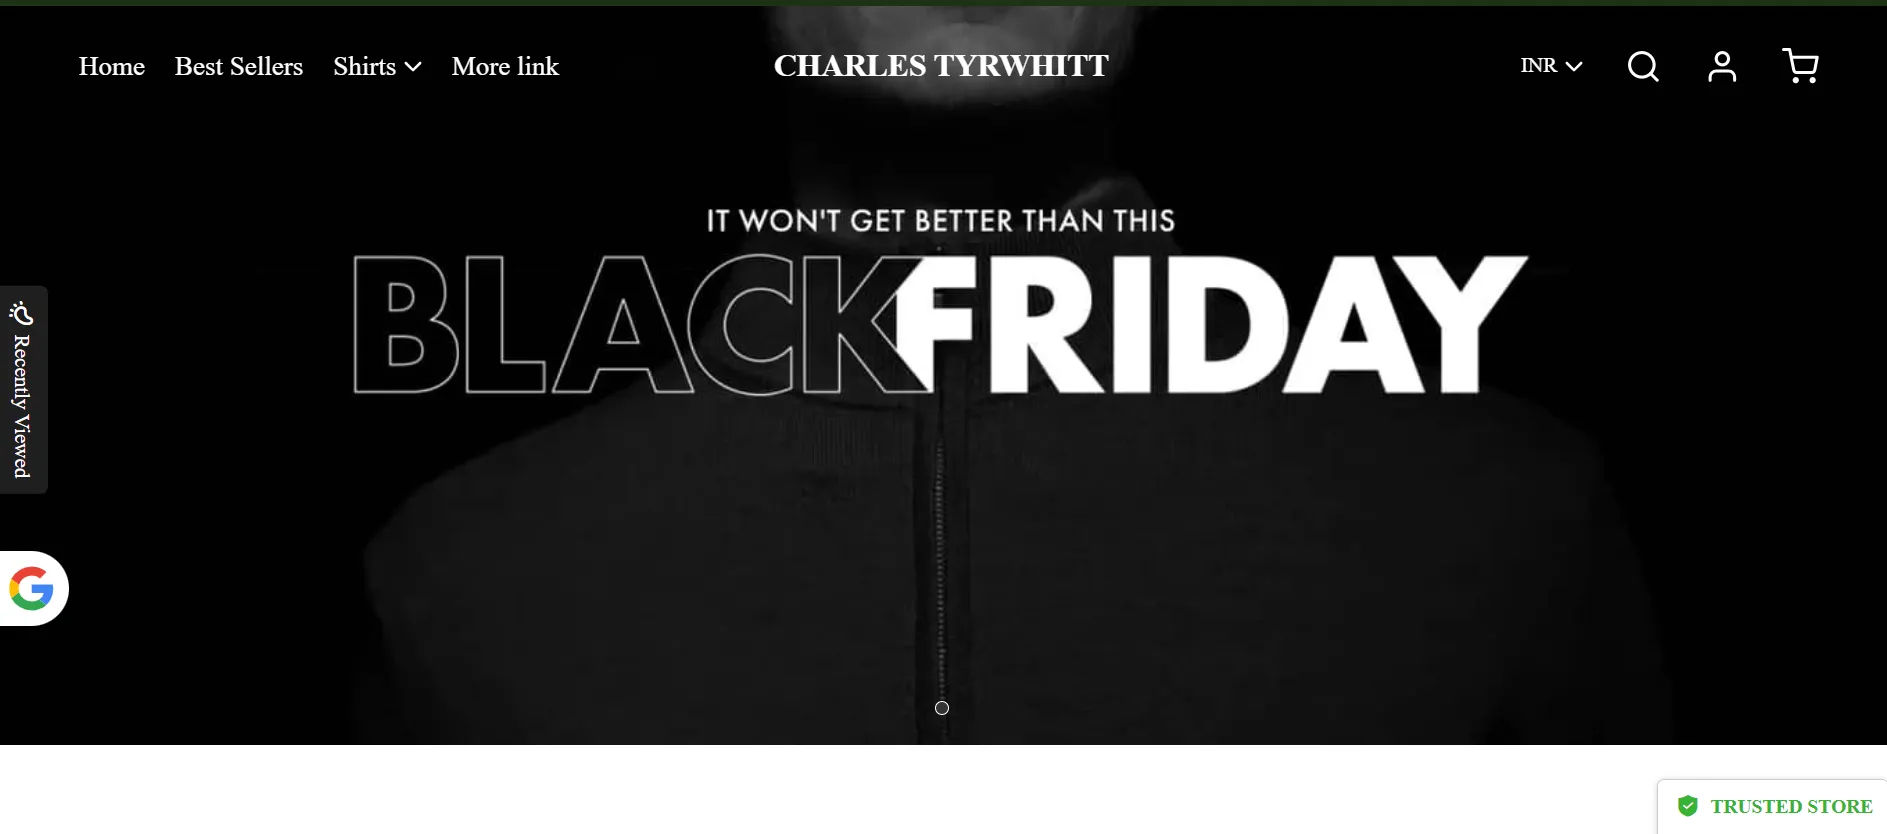 Tyrshirt Com Scam - Fake Charles Tyrwhitt Store